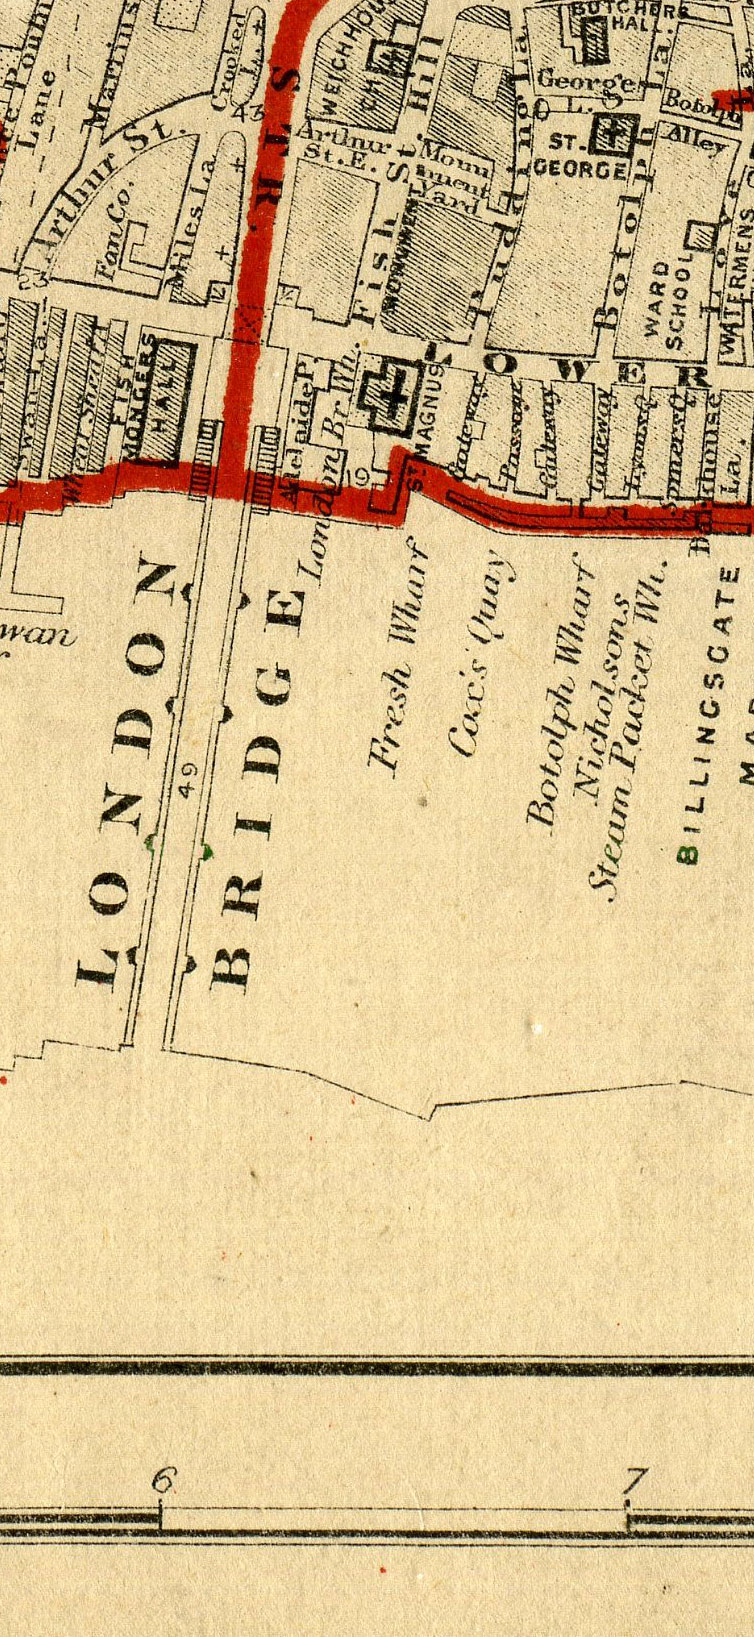 Stanford's School Board Map - City Of London 1877